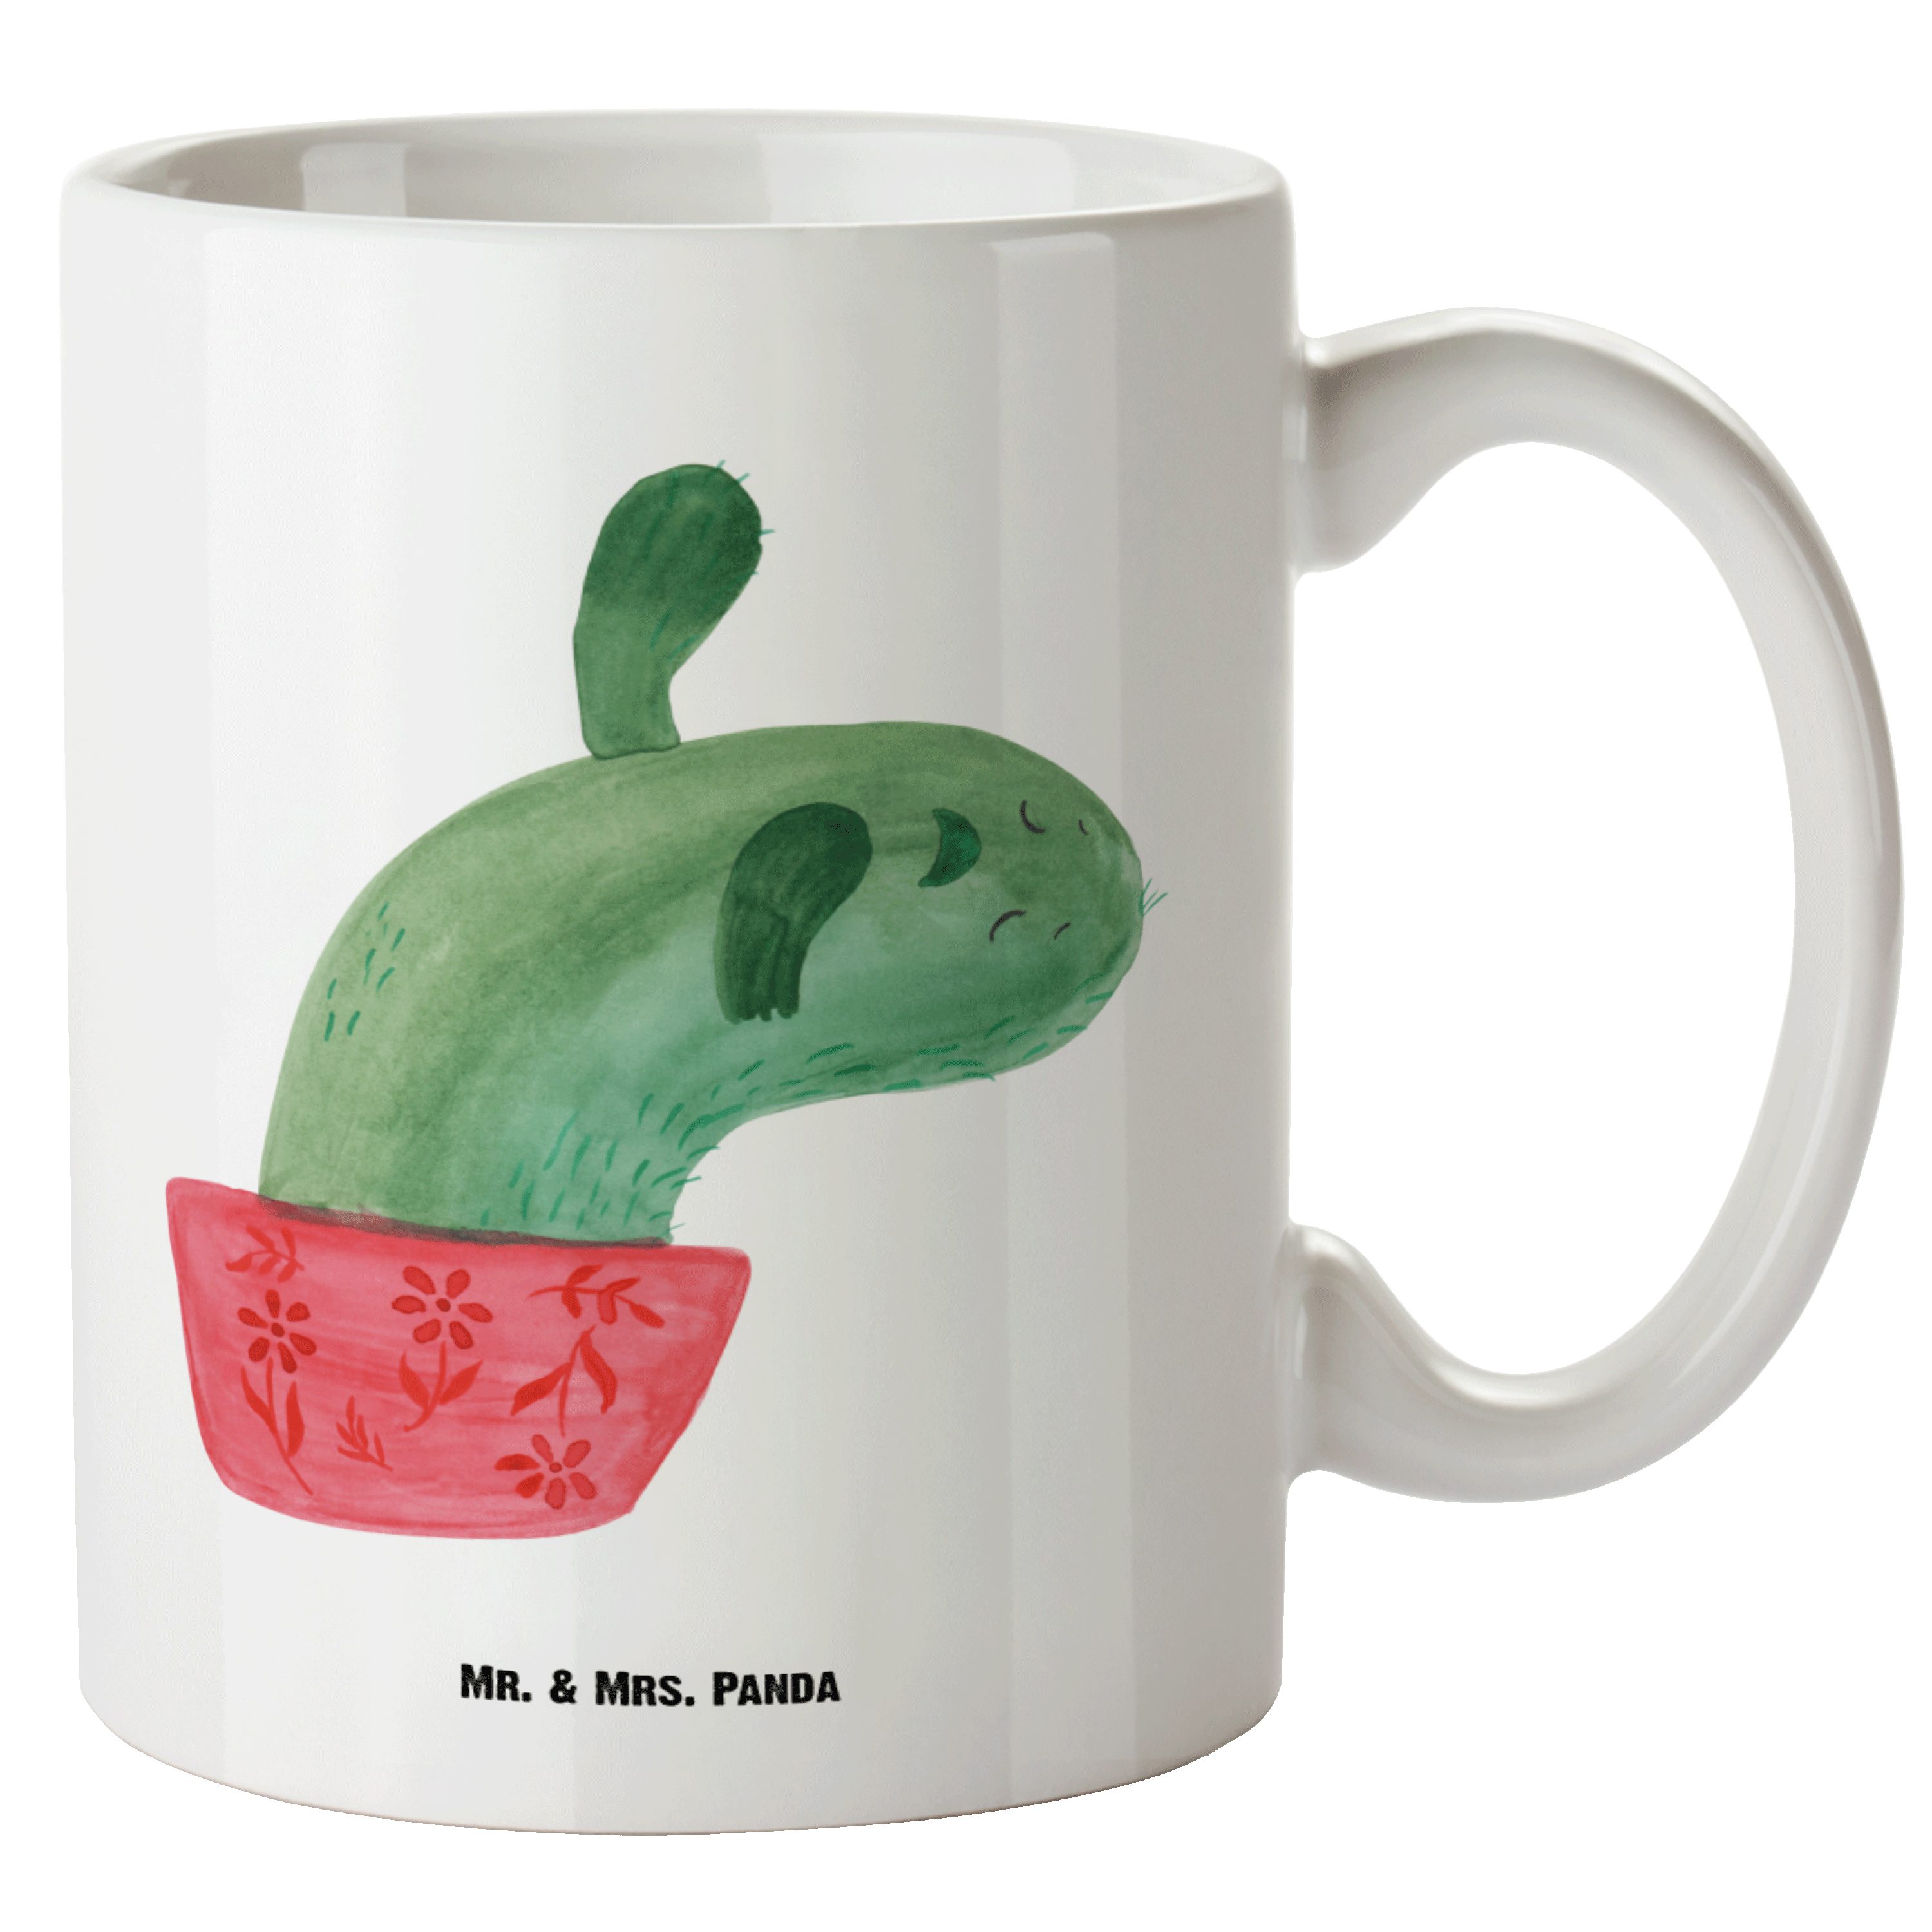 Geschenk, Tasse - Keramik Groß, Mamamia Kaktus Tasse Tasse, XL - & Panda Weiß XL Mr. Mrs. Grosse Kaffeetasse,